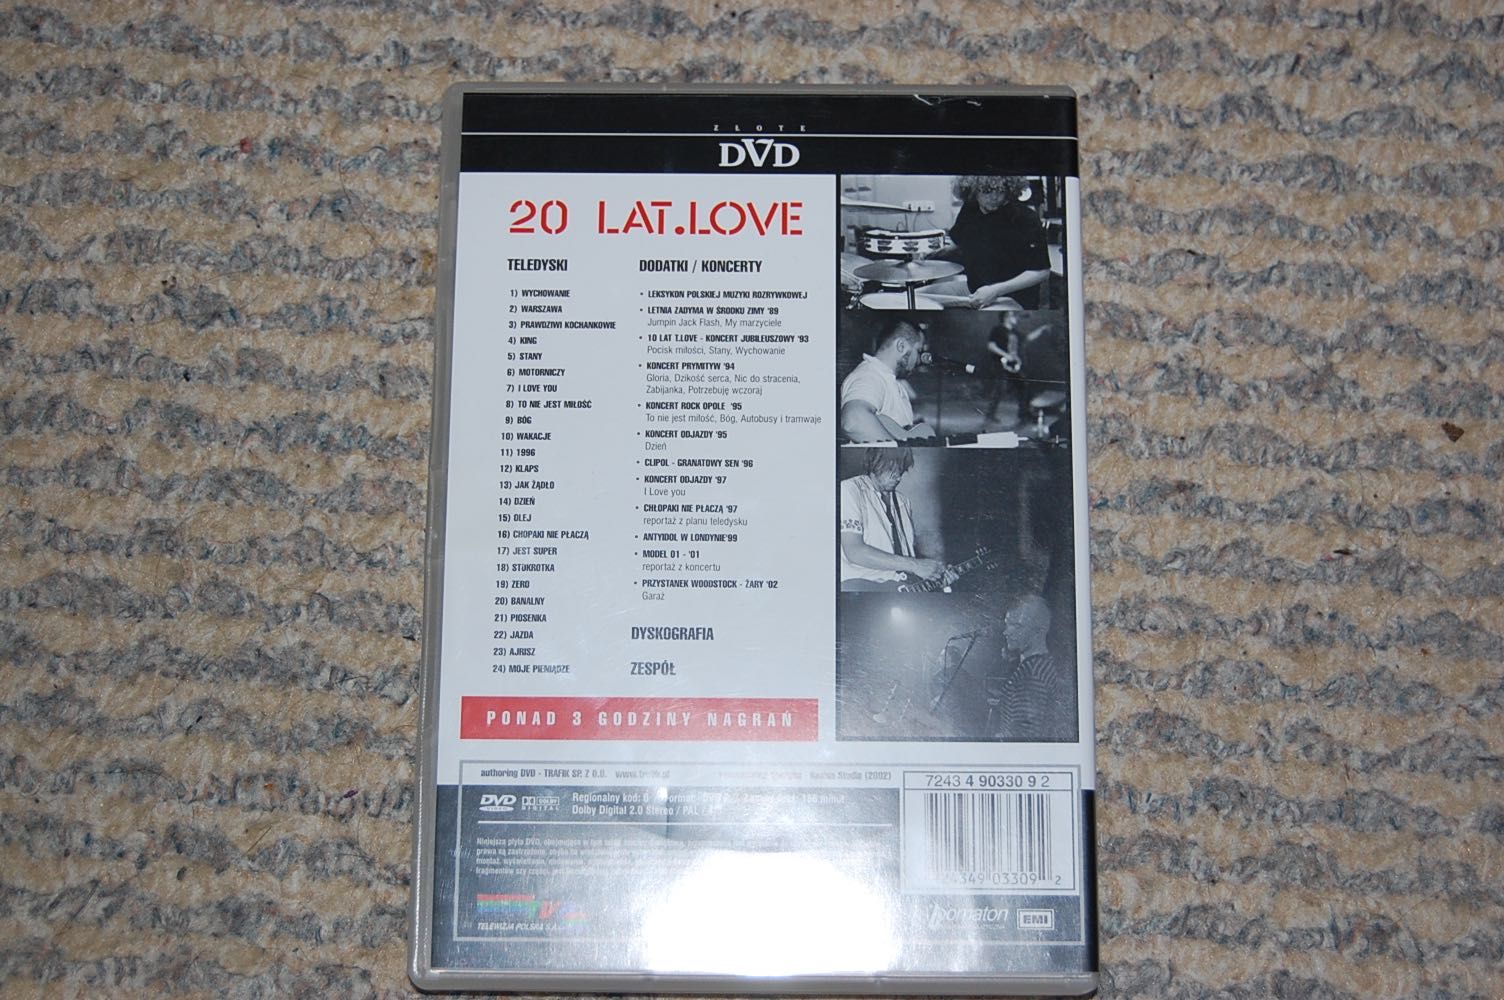 20 lat T.Love dvd